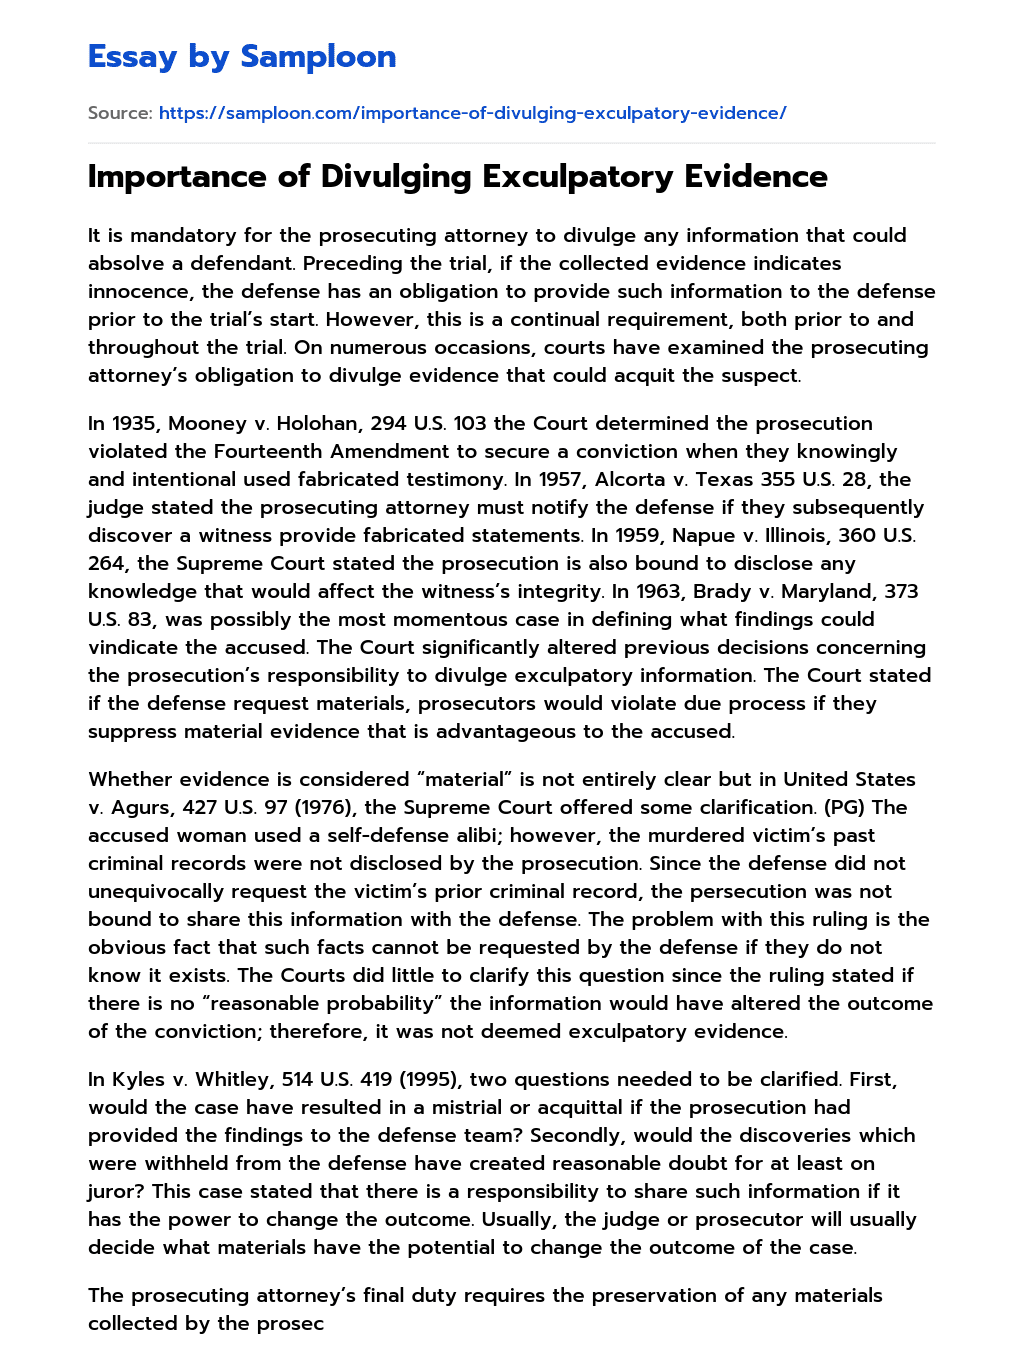 Importance of Divulging Exculpatory Evidence essay